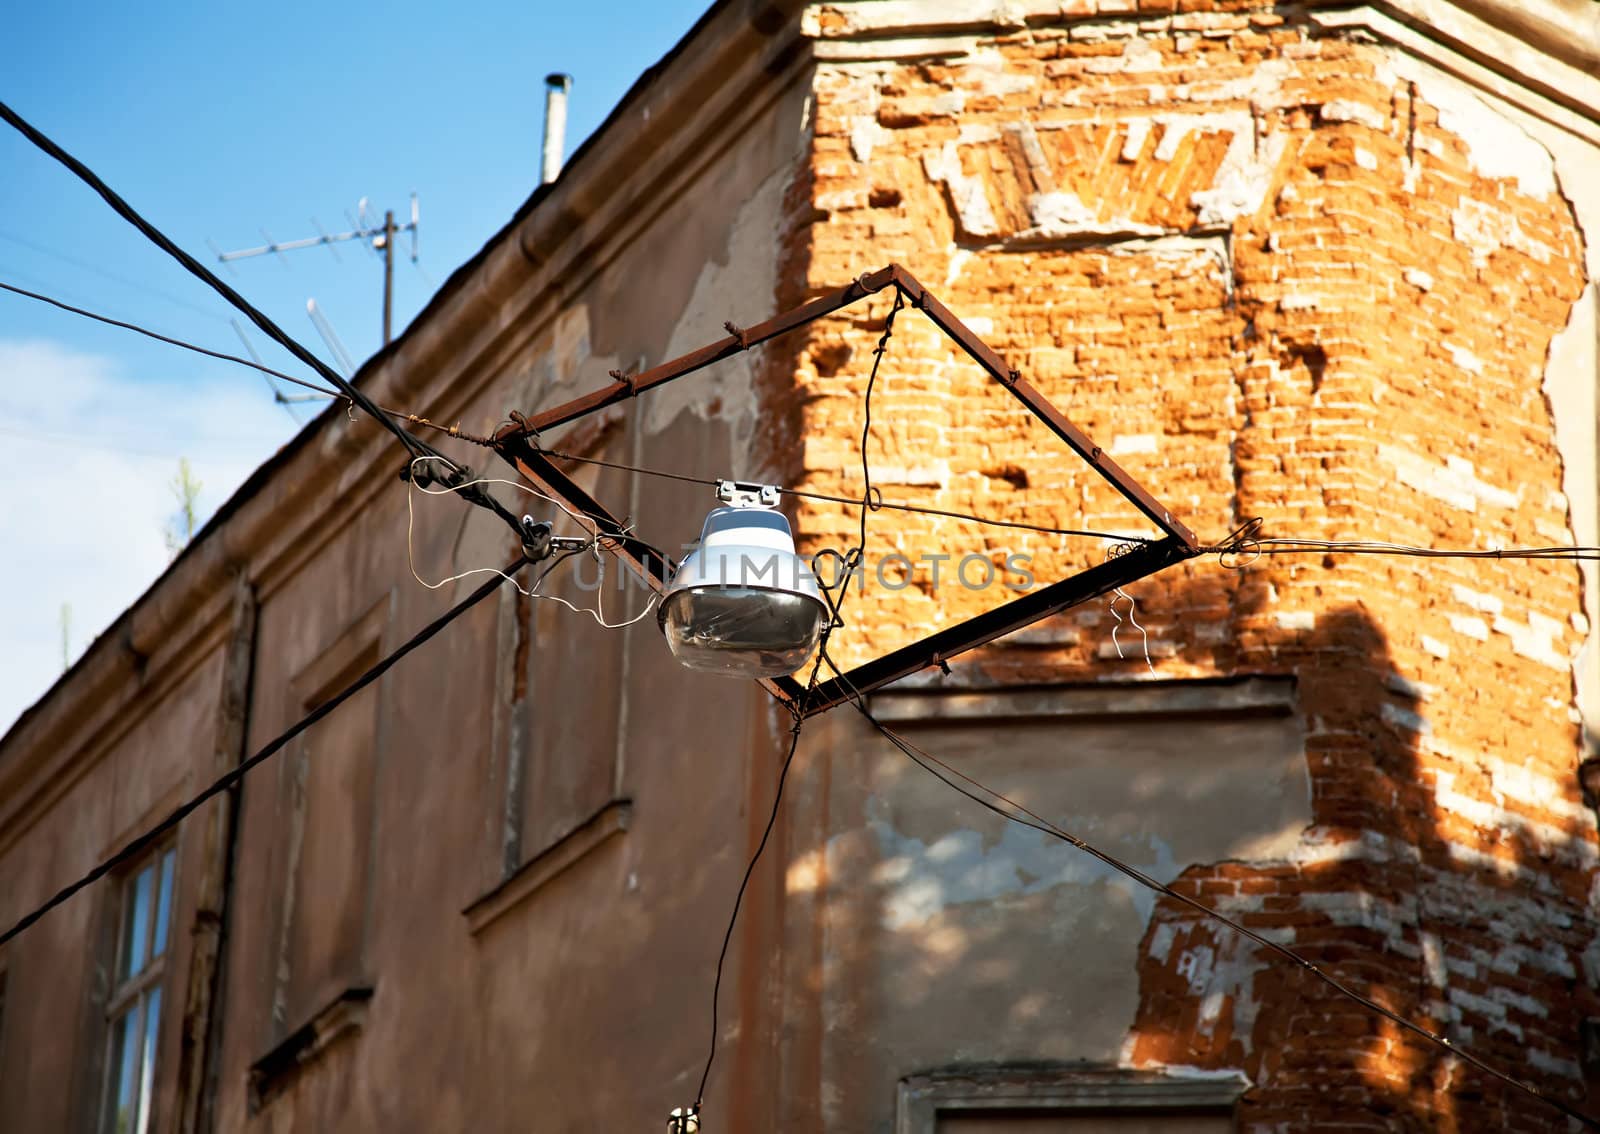 Old hanging city lantern and brick wall